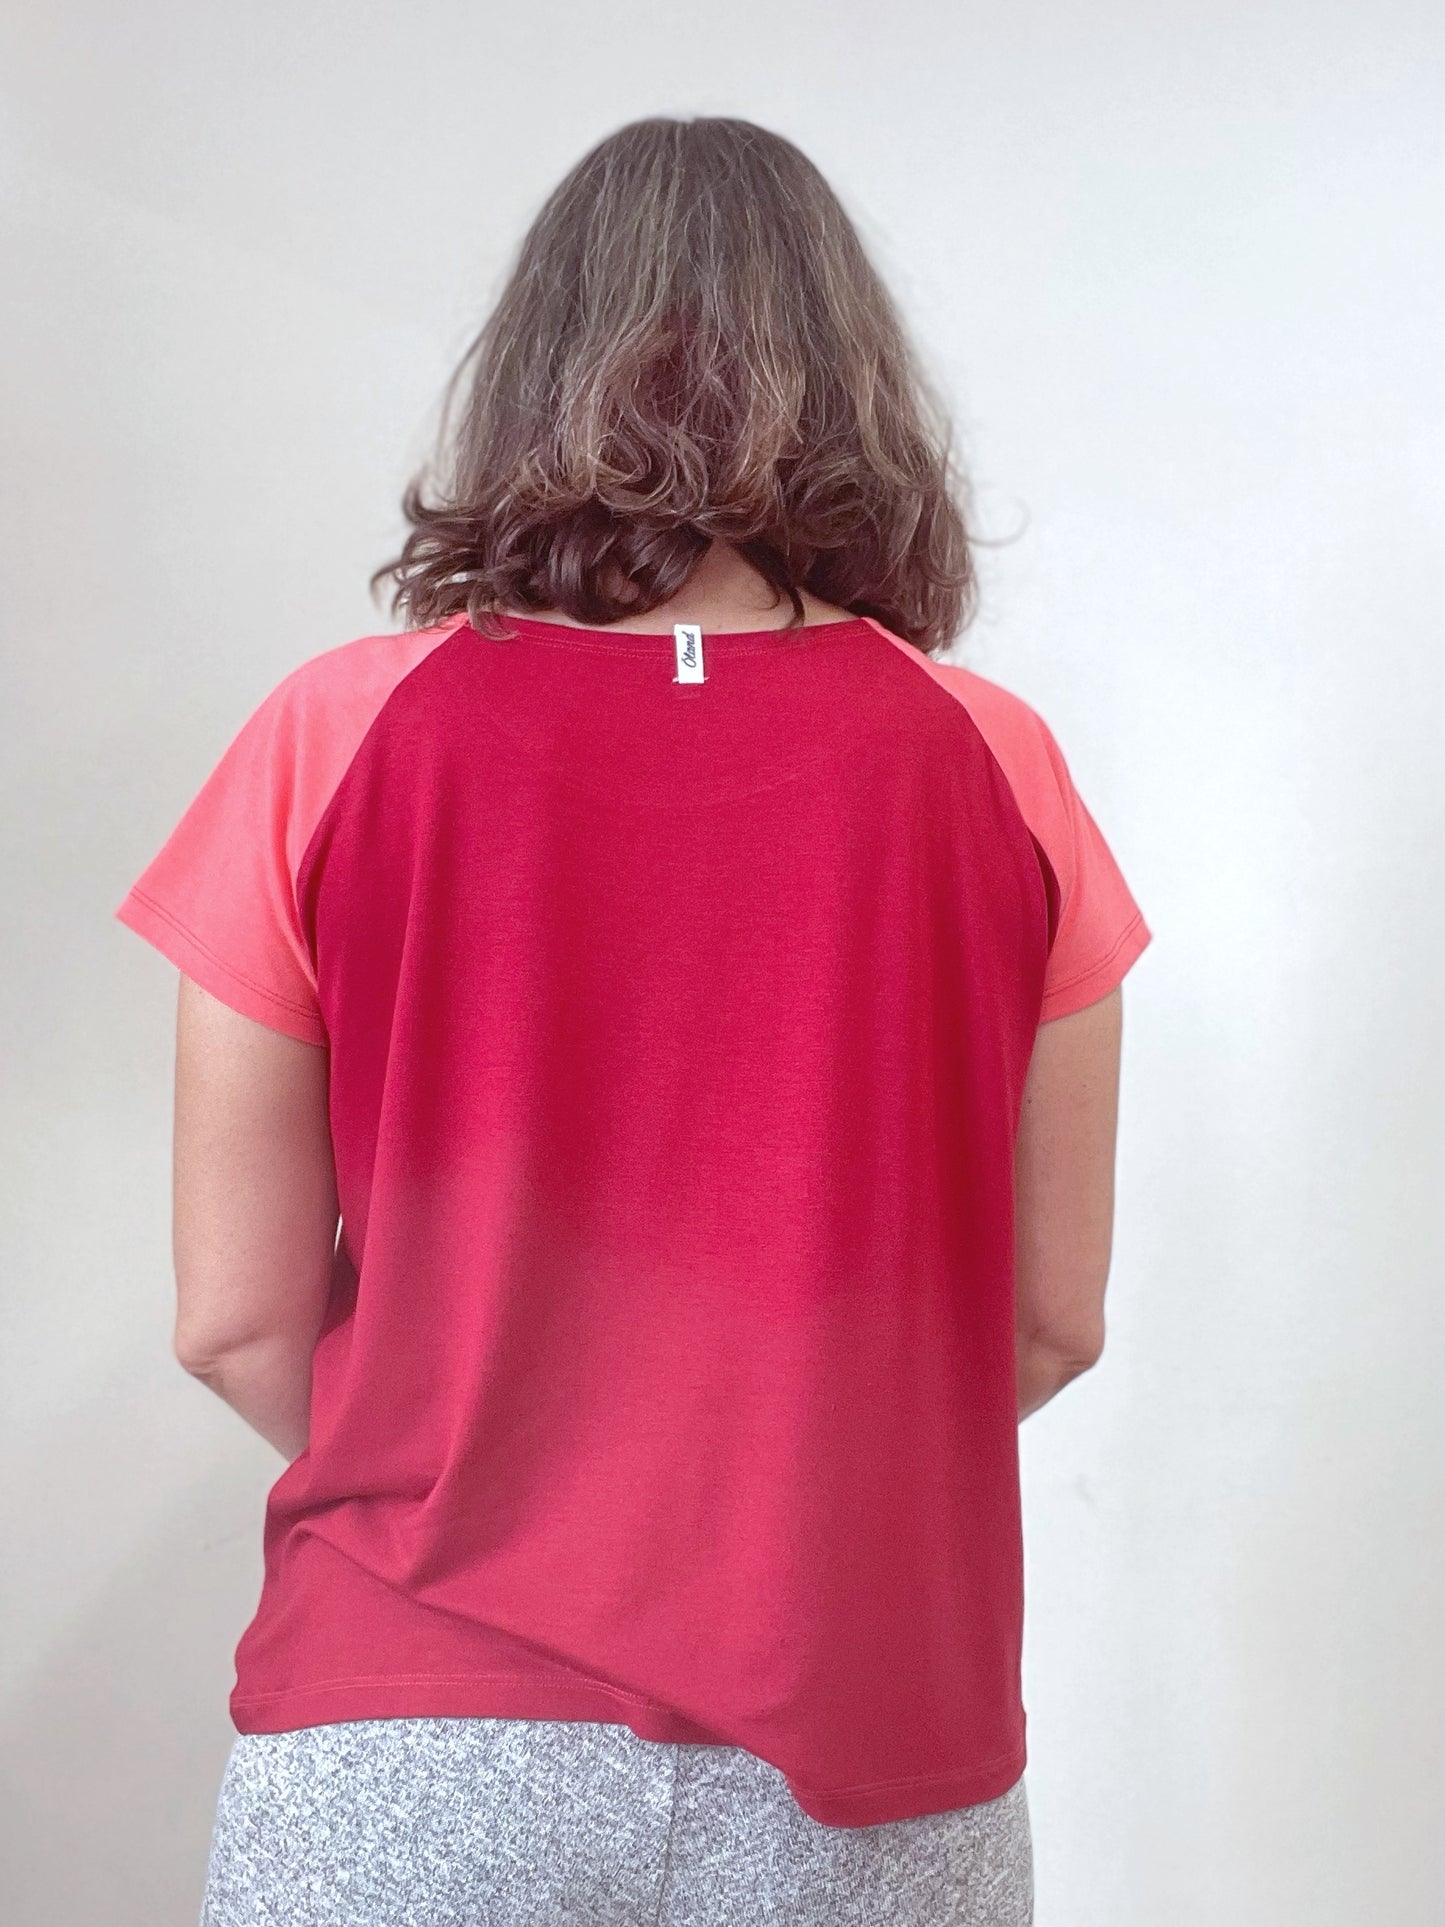 Camiseta manga corta raglán granate i rosa